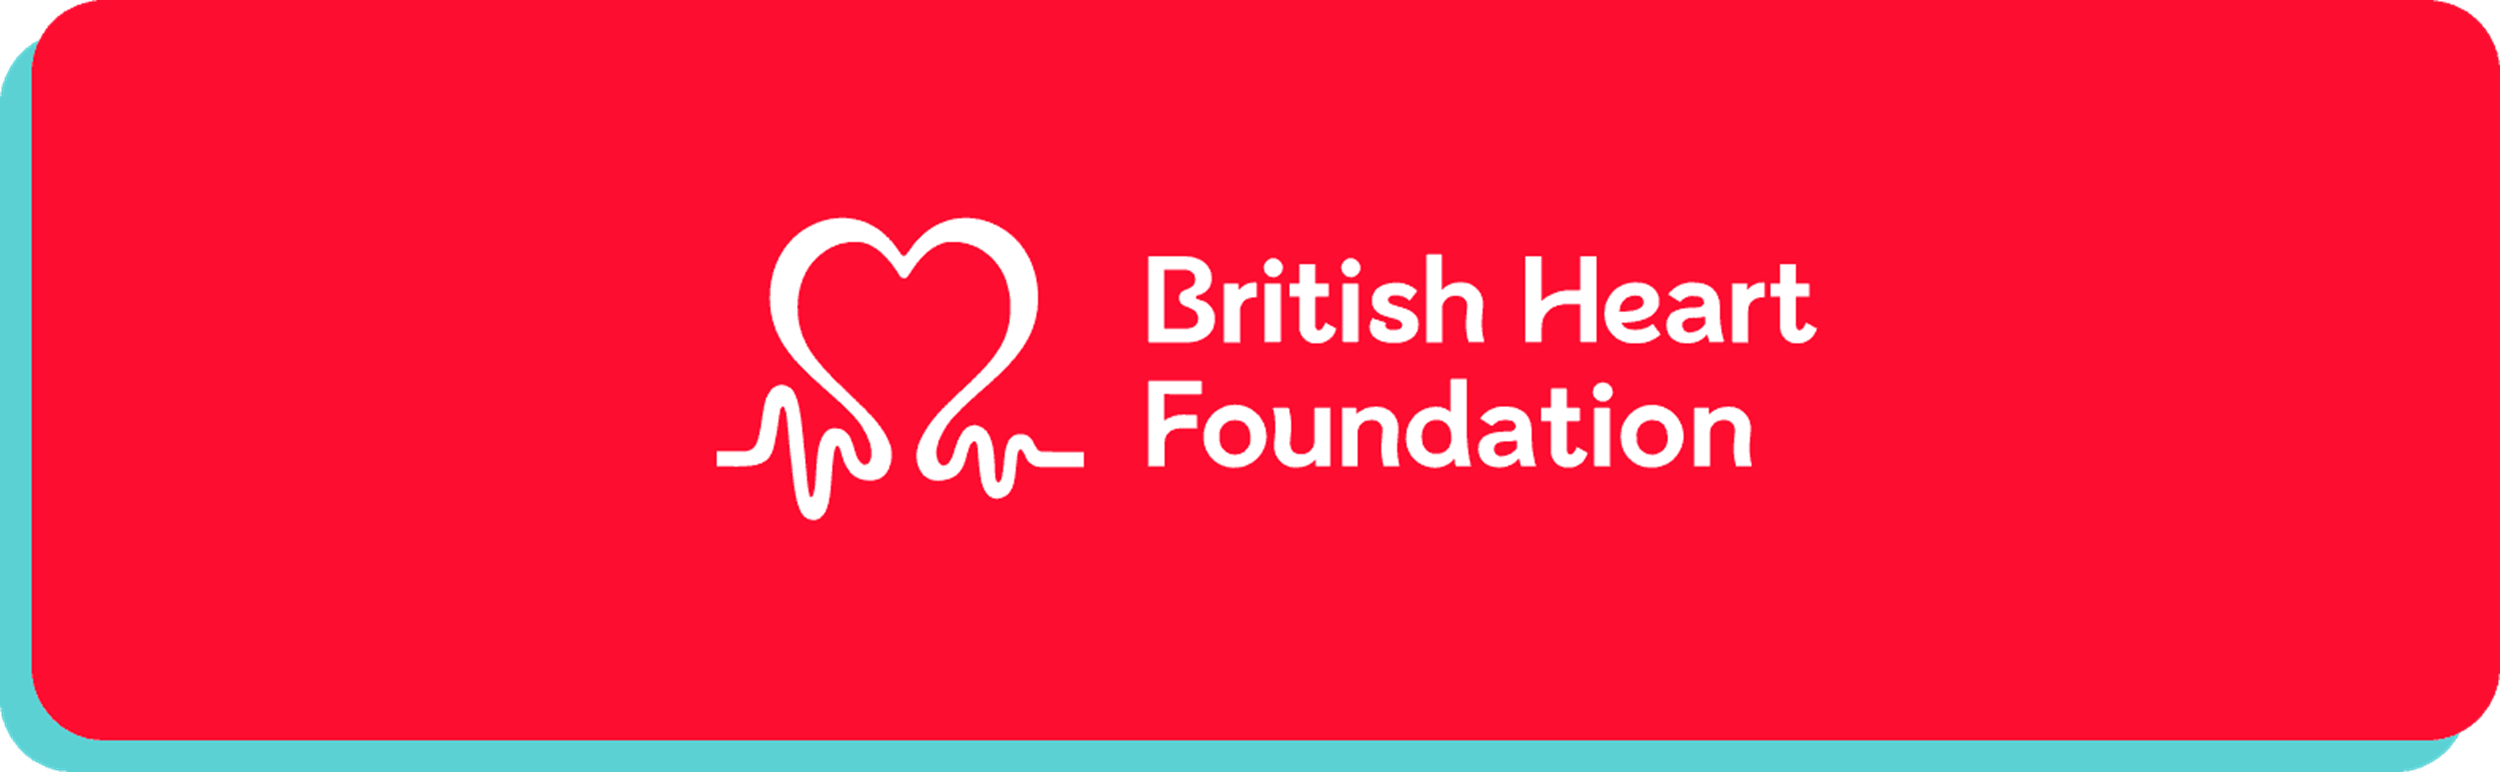 British heart foundation